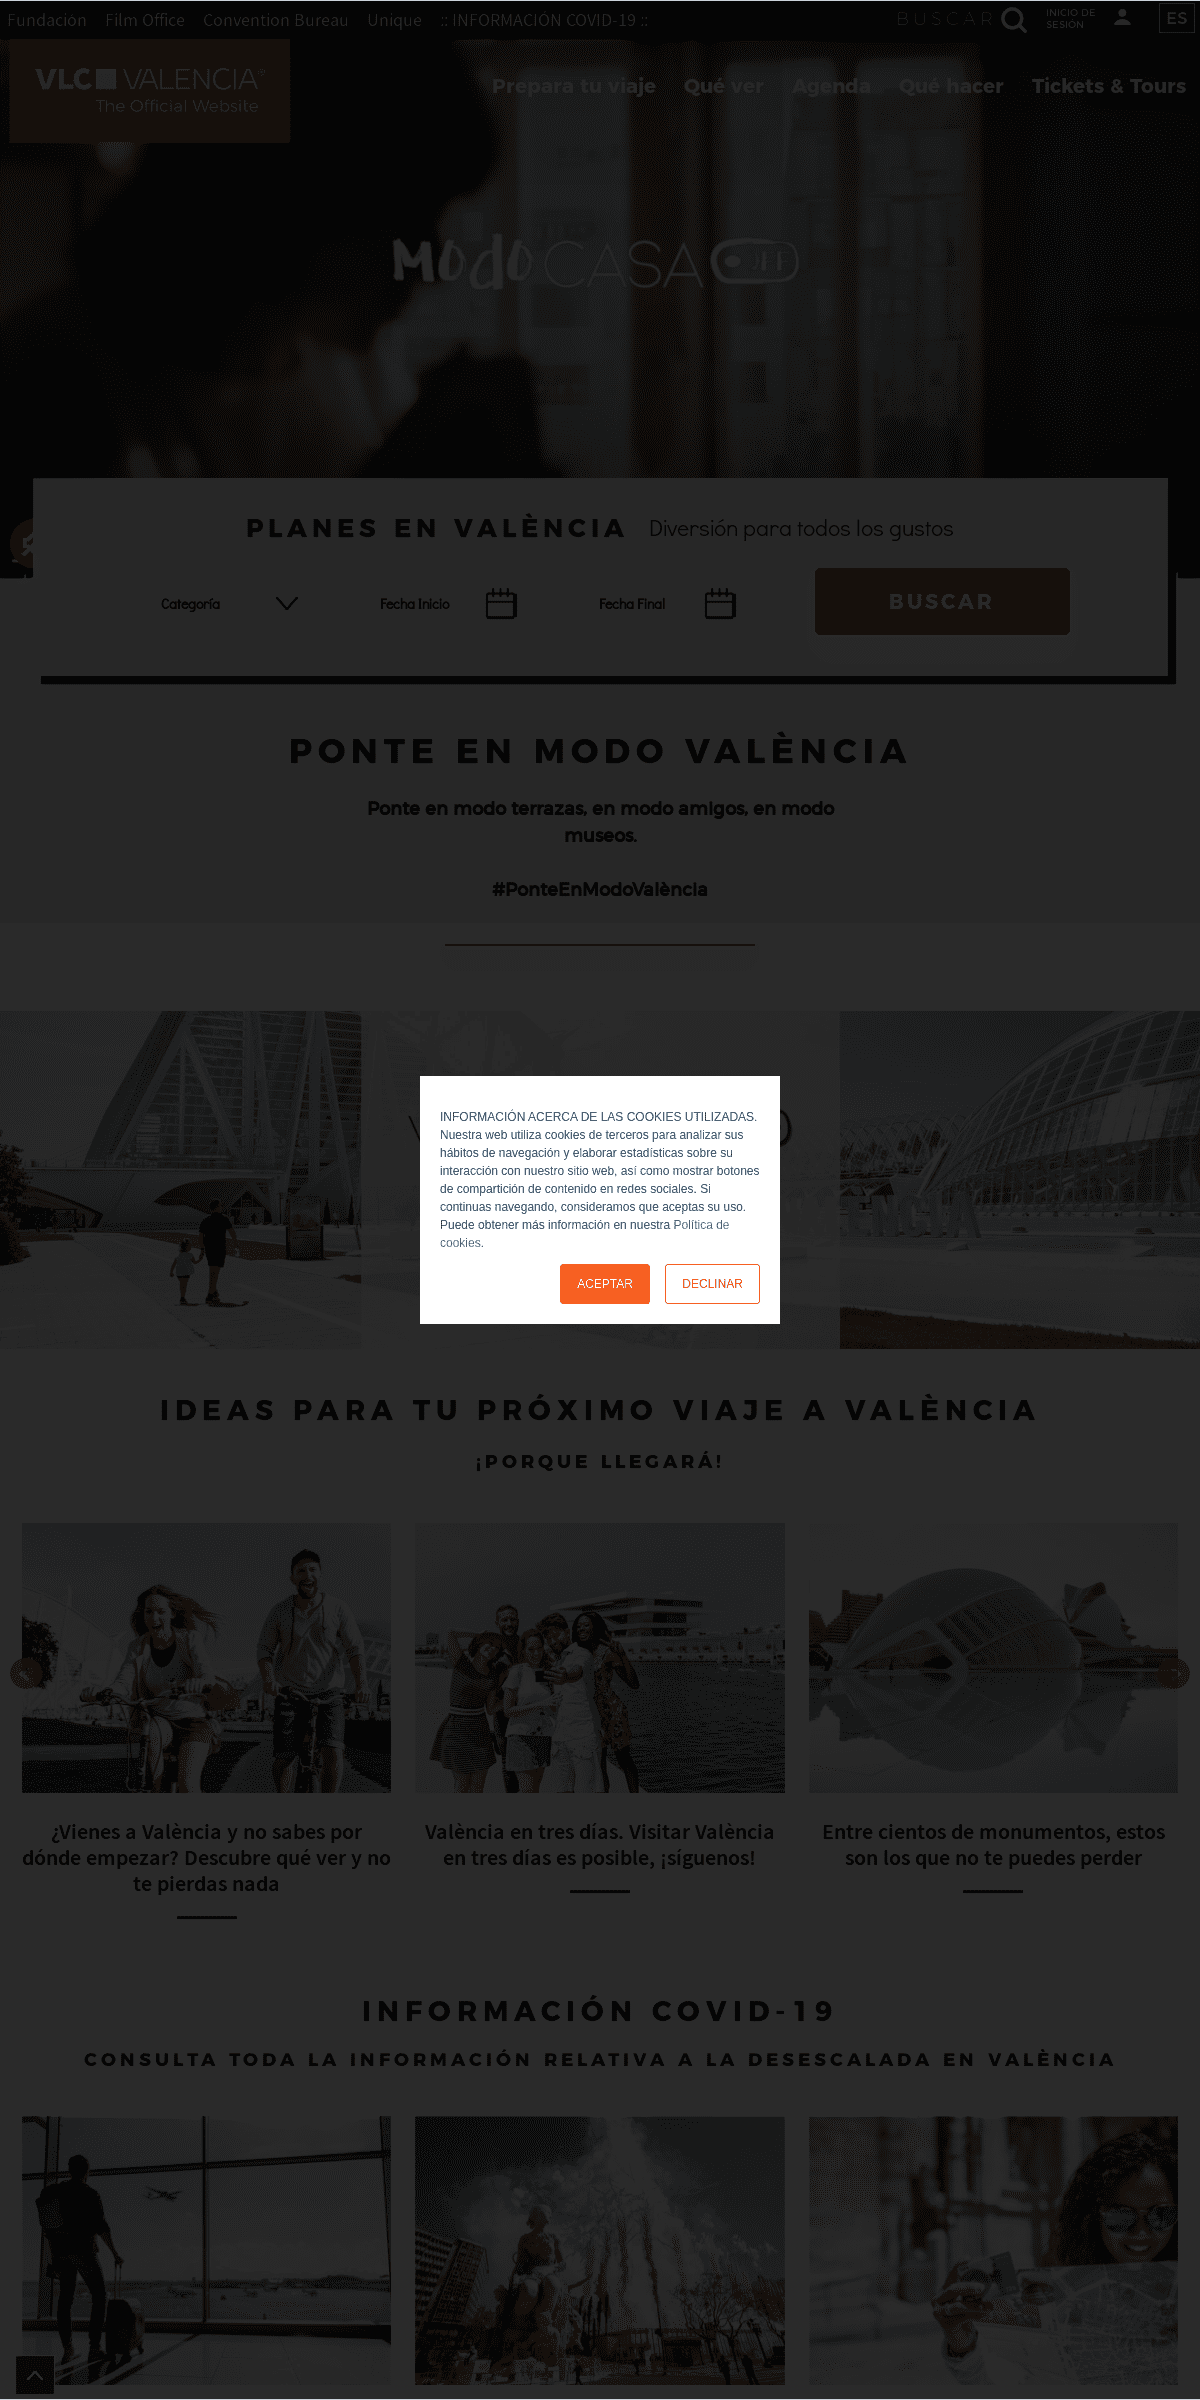 A complete backup of visitvalencia.com